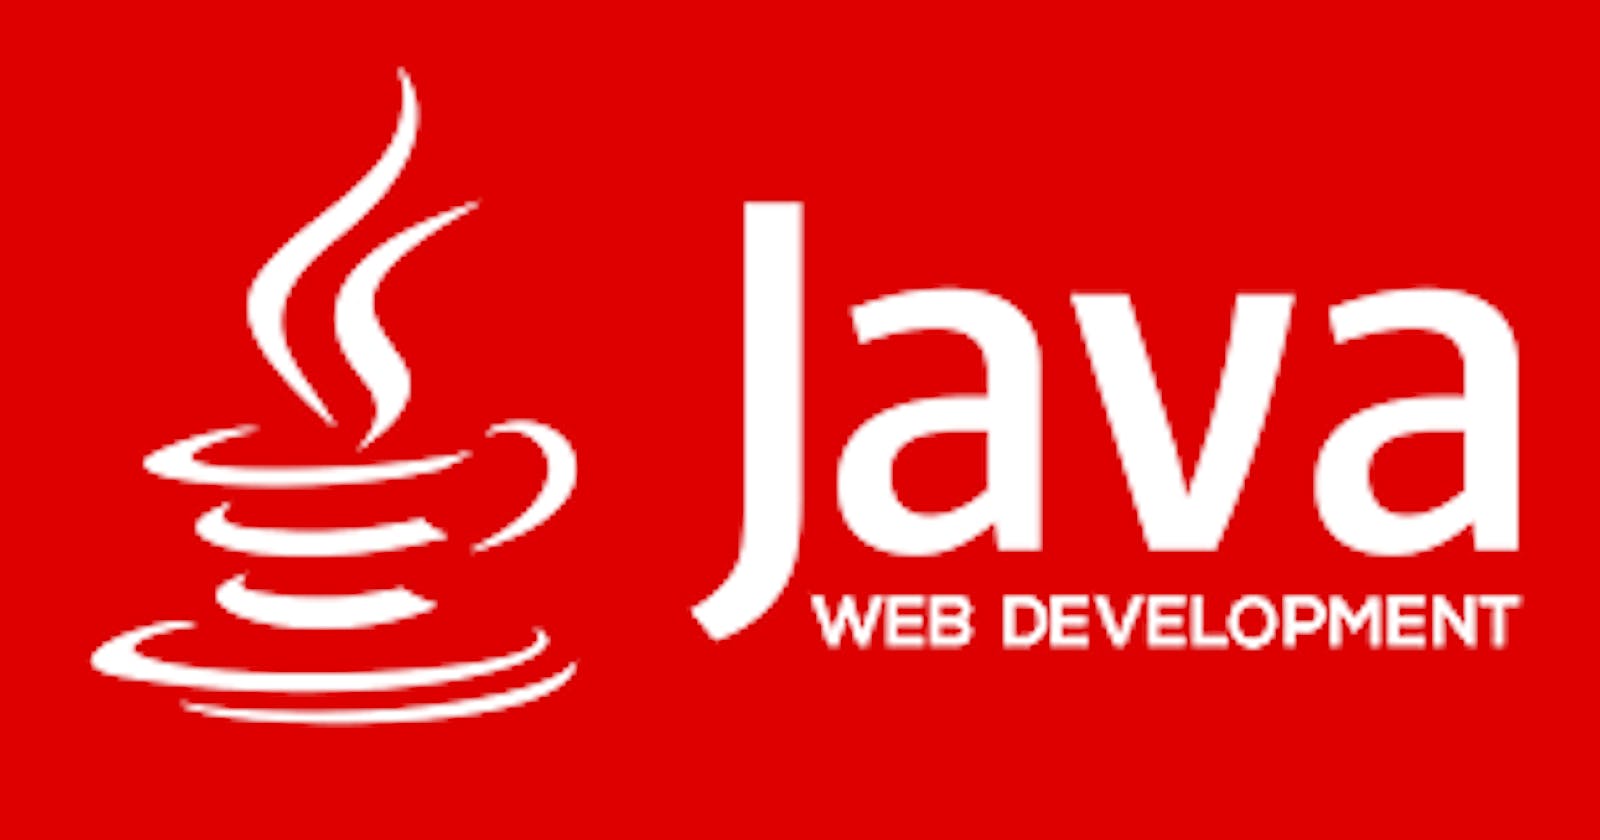 Java Web Development: Creating Dynamic Web Applications